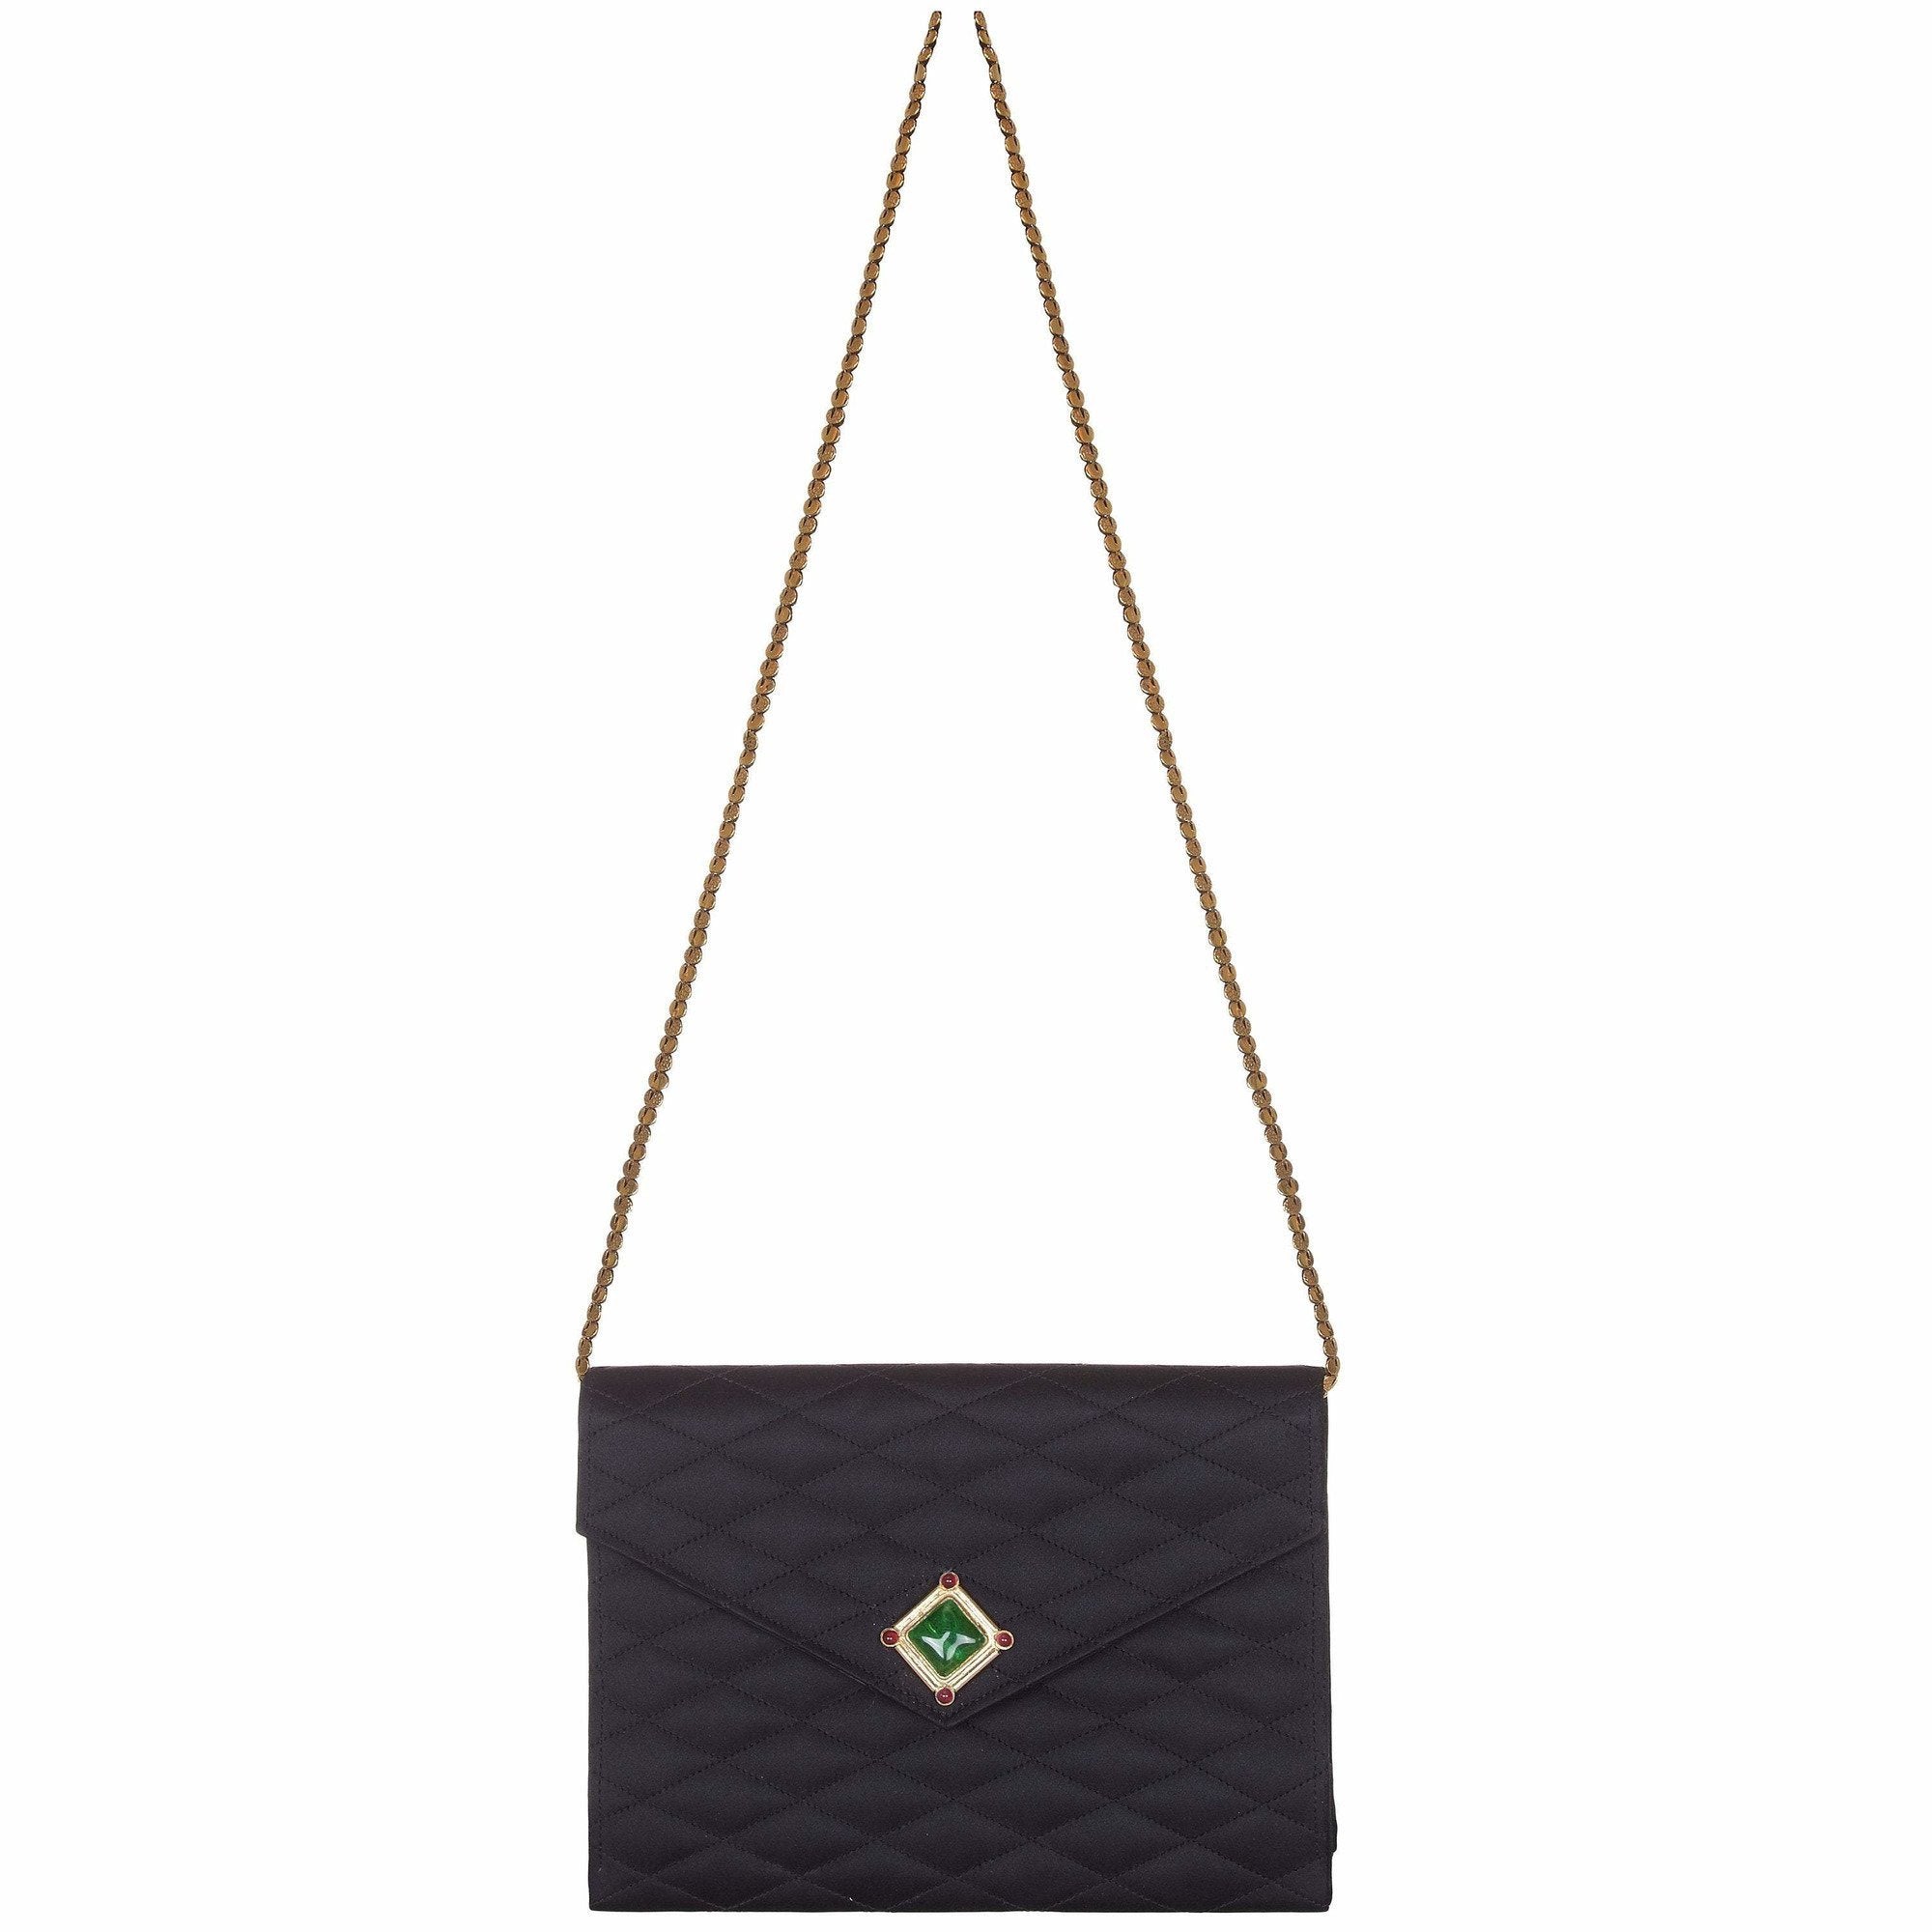 ARCHIVE - Rare 1980s Chanel Black Satin Green Gripoix Stone Bag